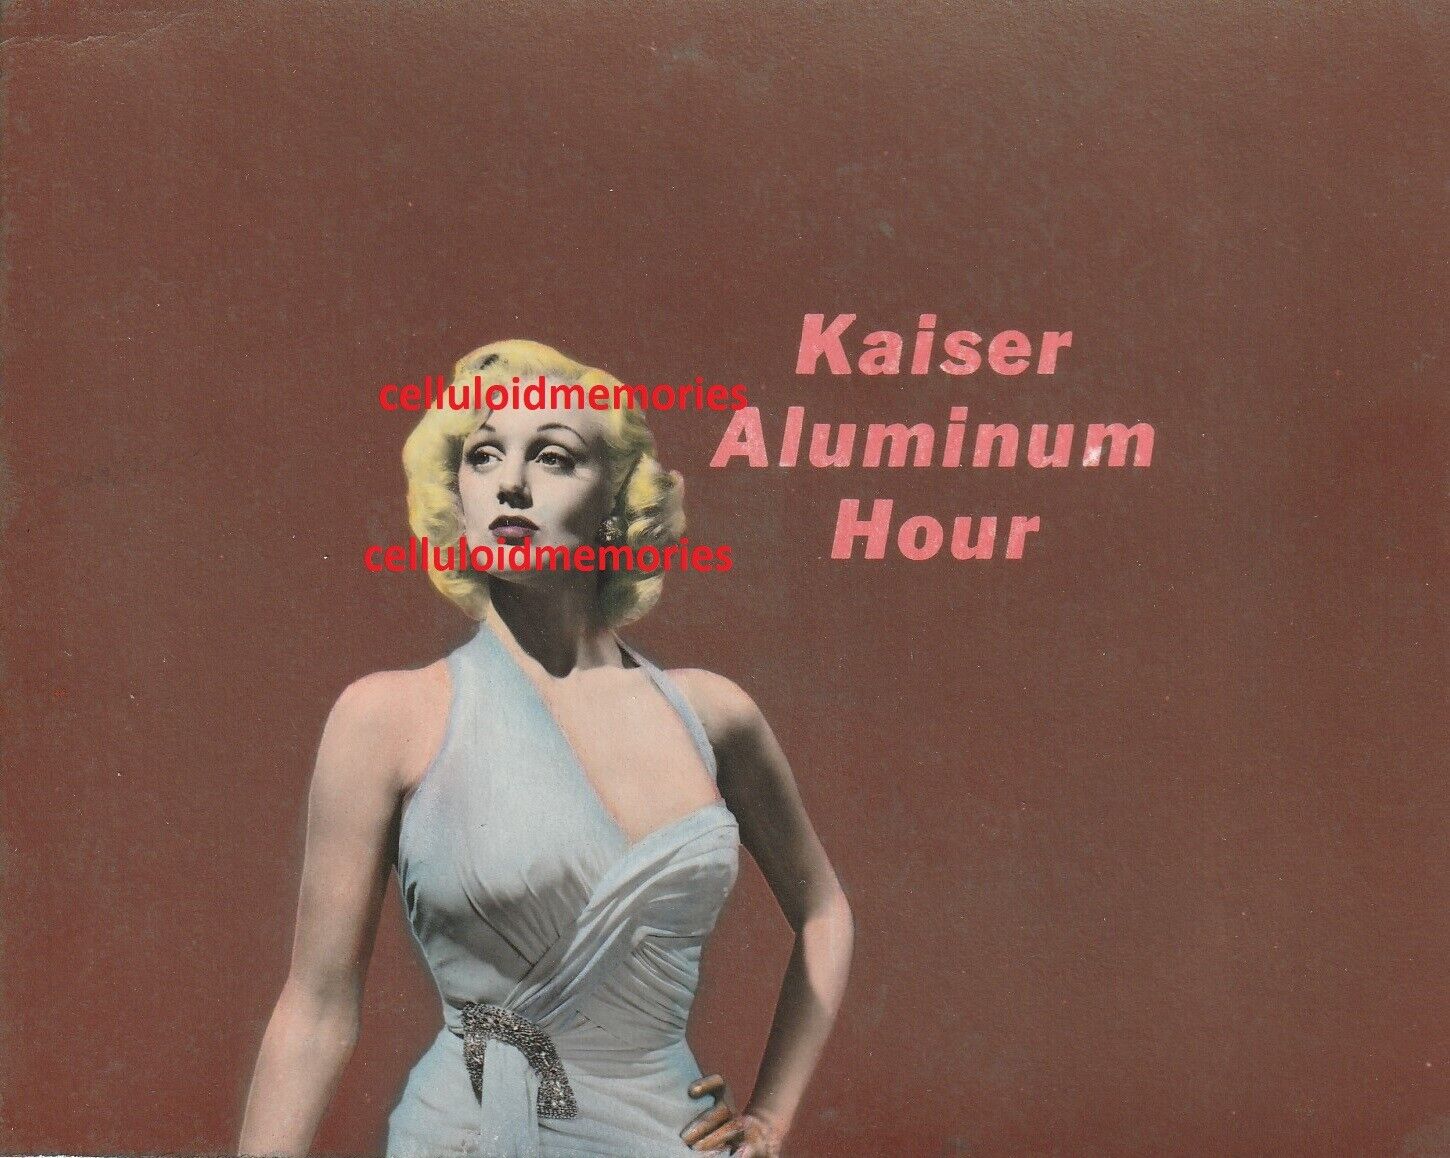 Orig Nbc Bump Card Promo Photo 1956 The Kaiser Aluminum Hour Jan Sterling Dbw #5